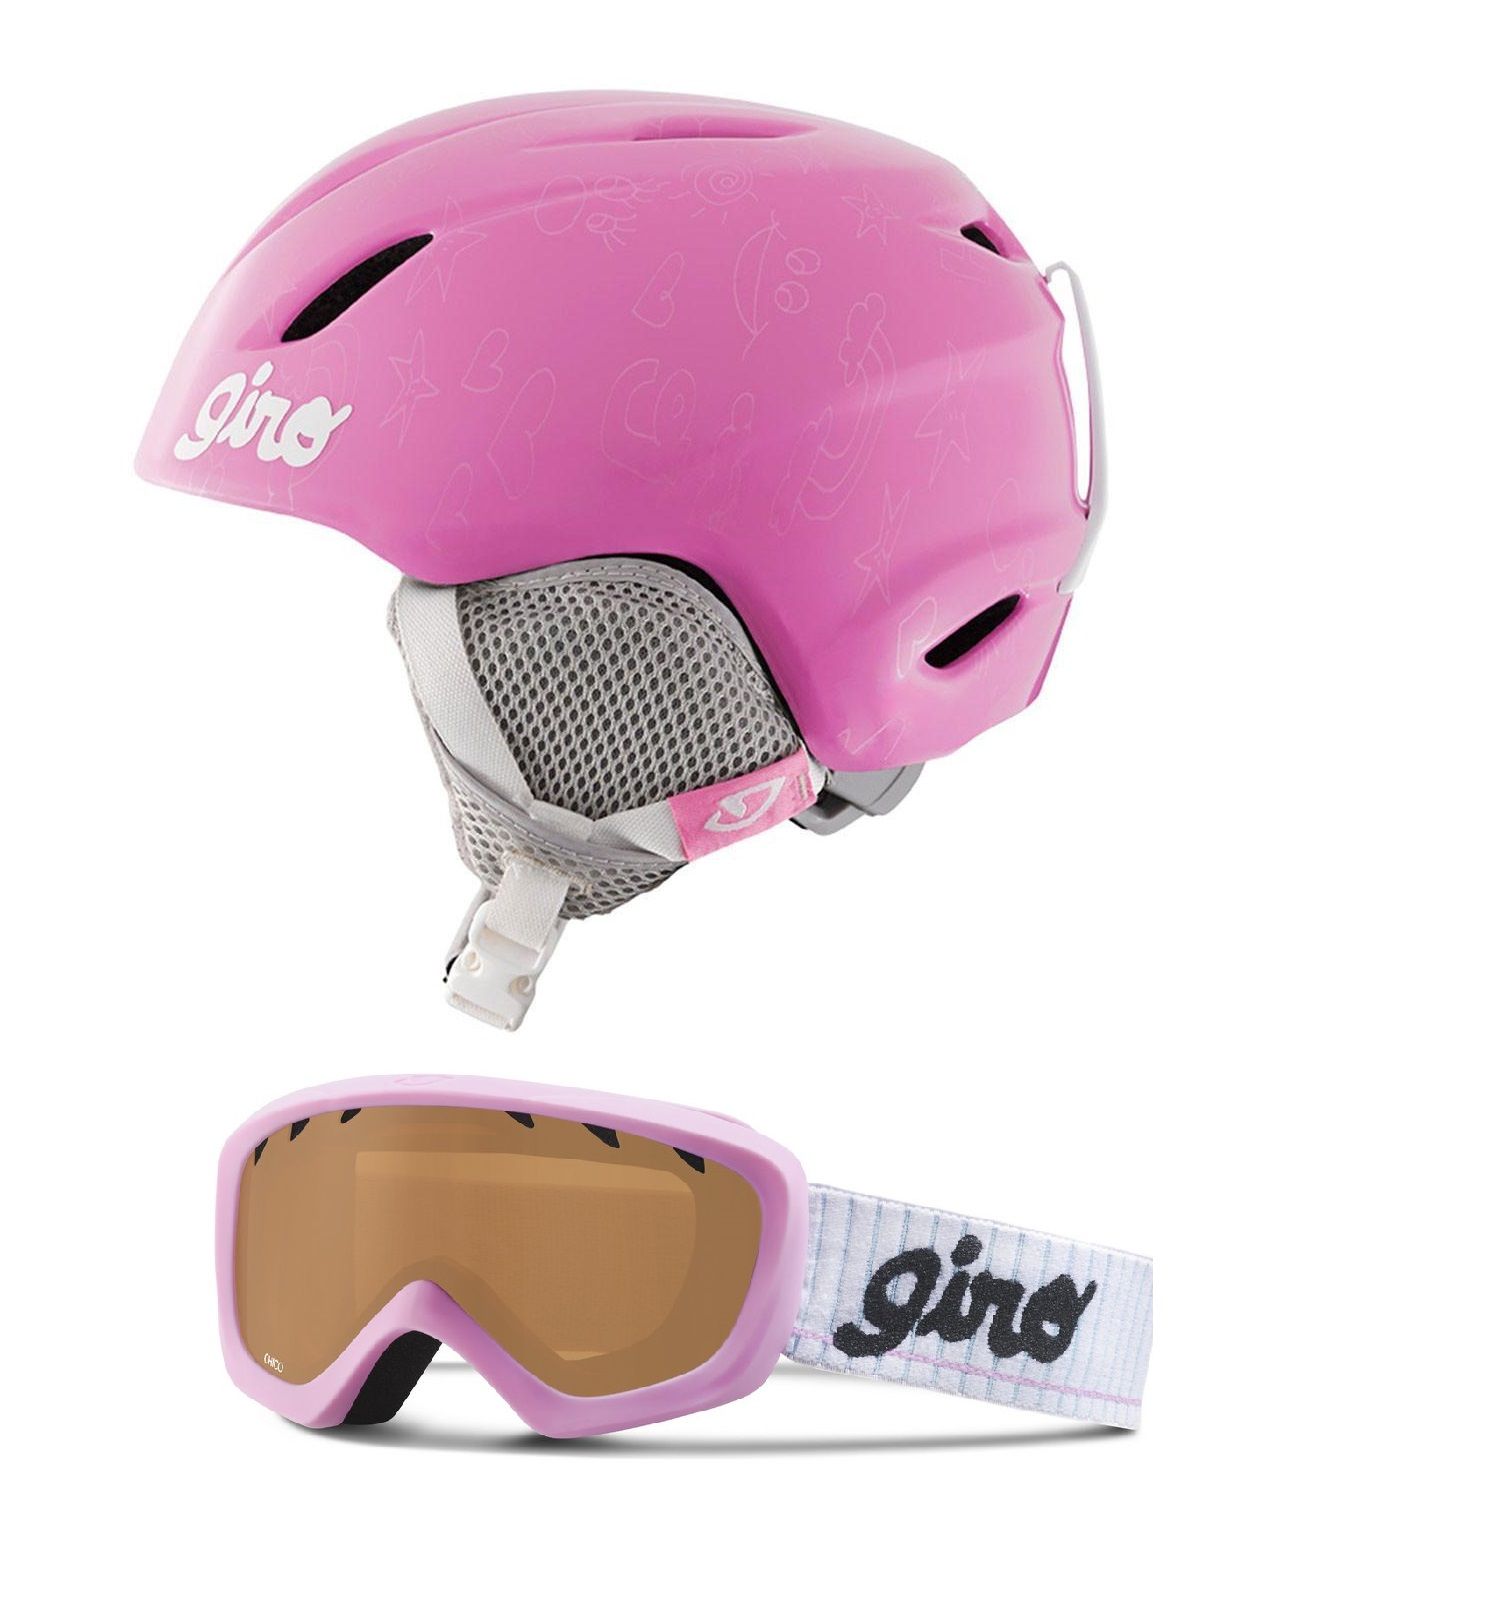 Горнолыжный шлем Giro Launch + маска Giro Chico розовый (launch-pink) XS 48.5-52см СКЛАД